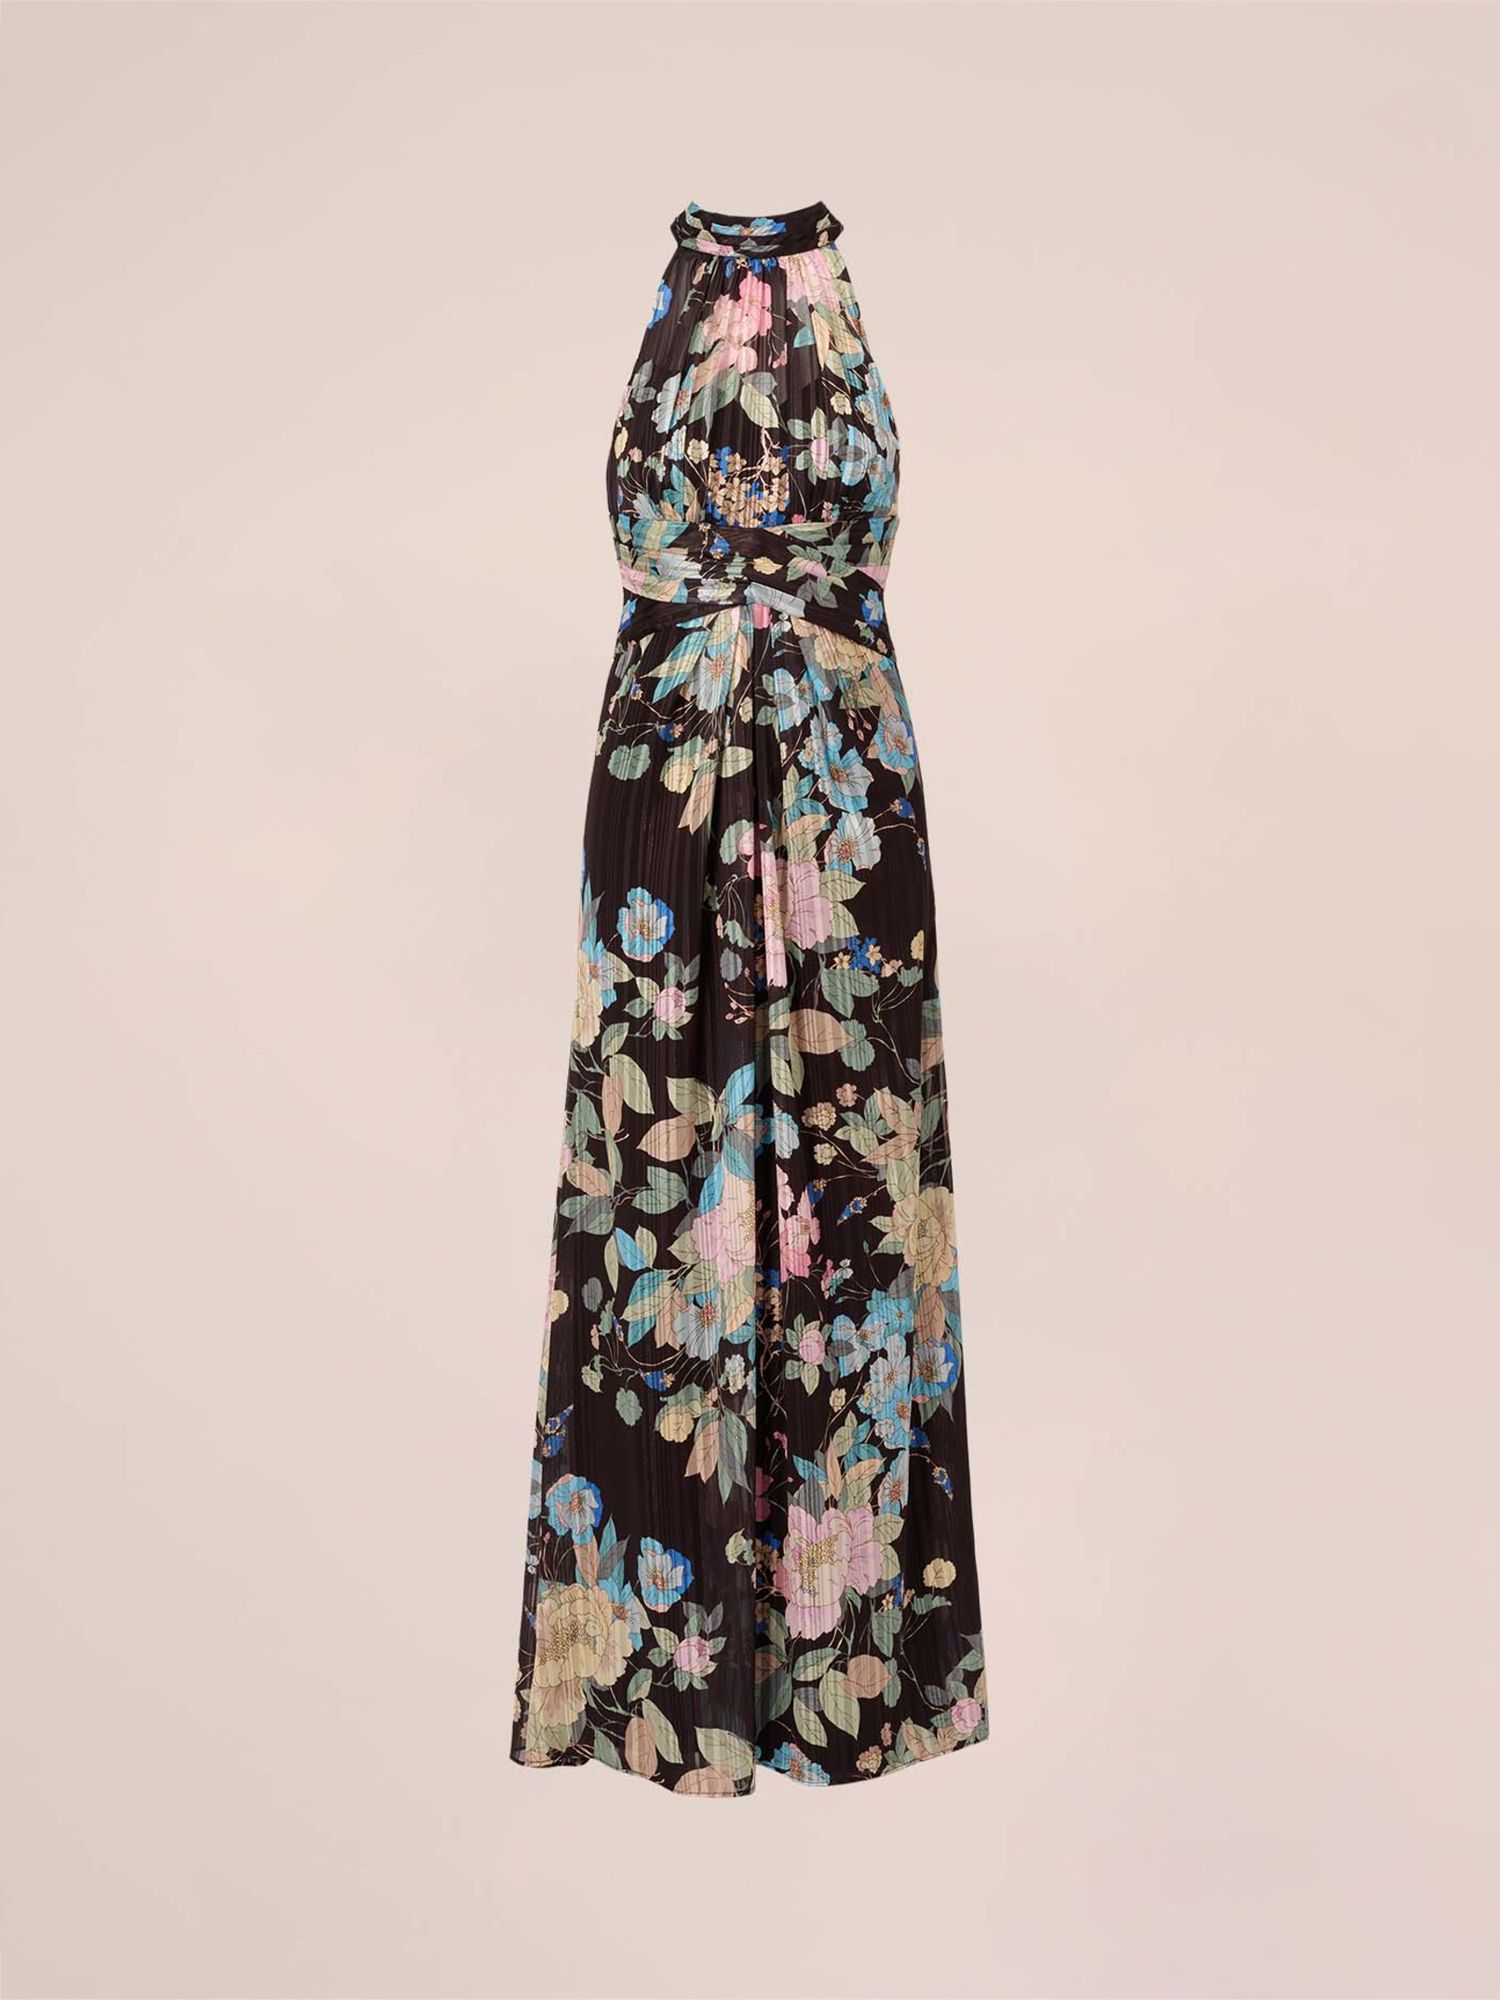 Adrianna Papell Floral Chiffon Halter Neck Maxi Dress, Black/Multi, 12